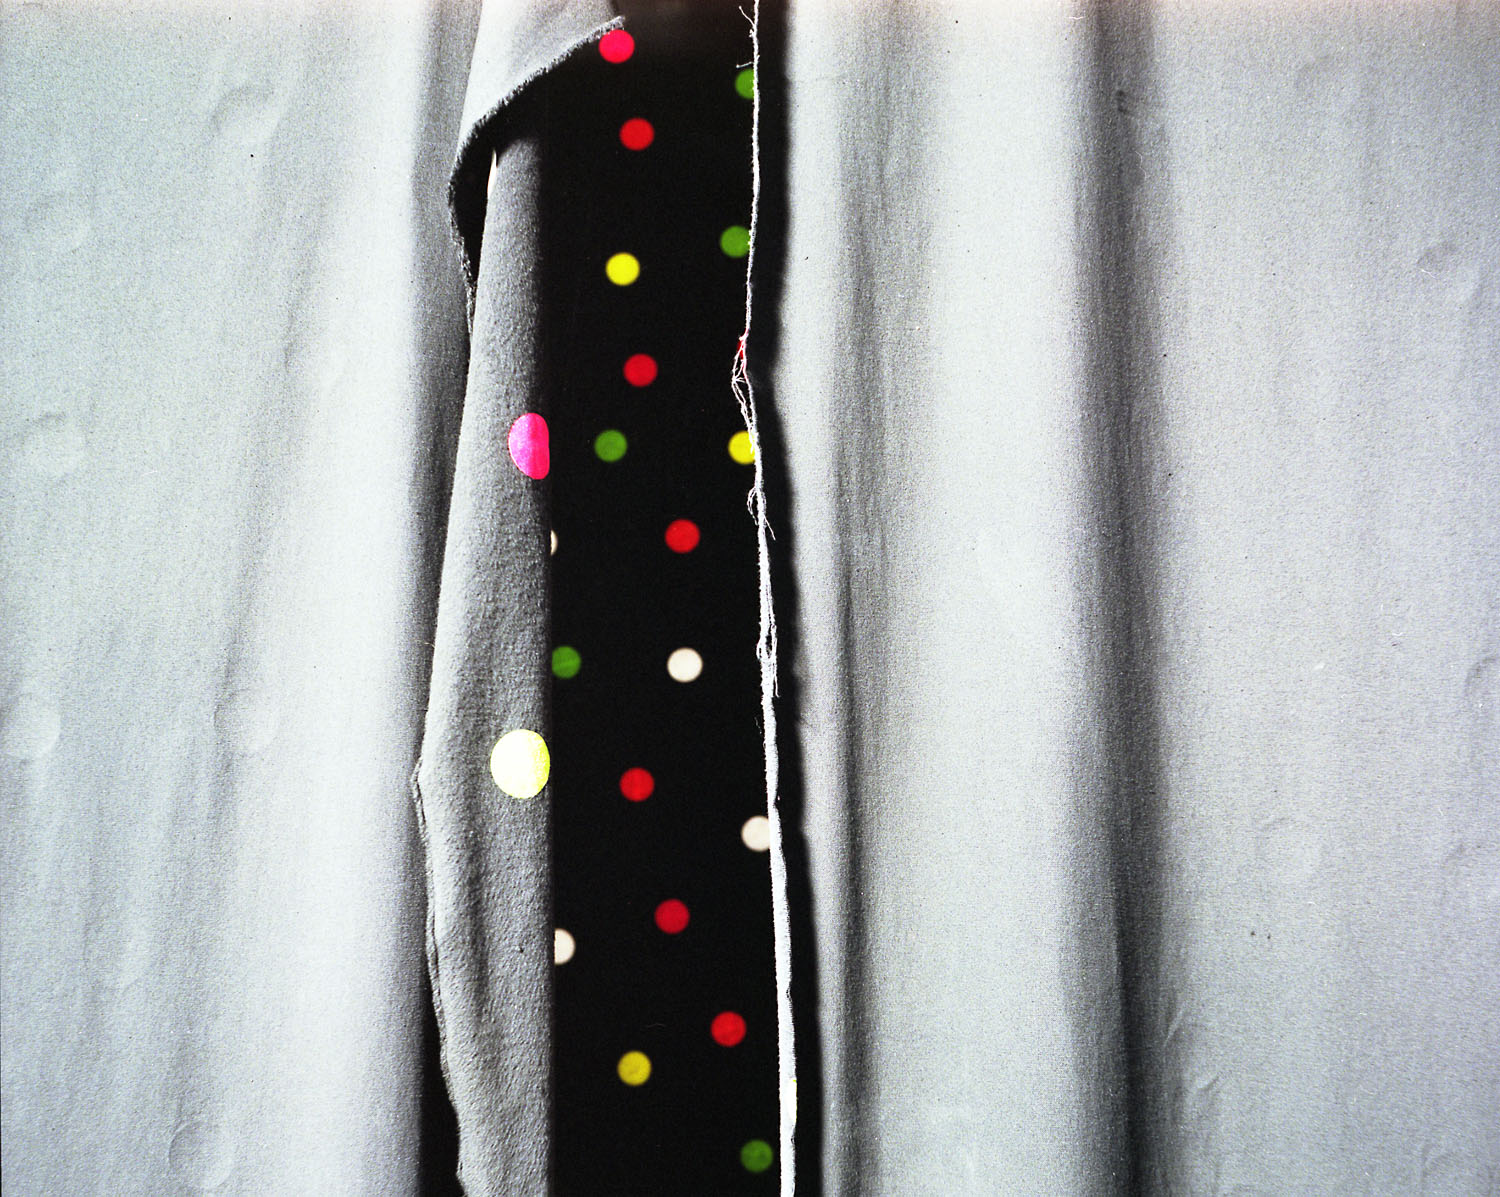 Image: Polka dots on curtain